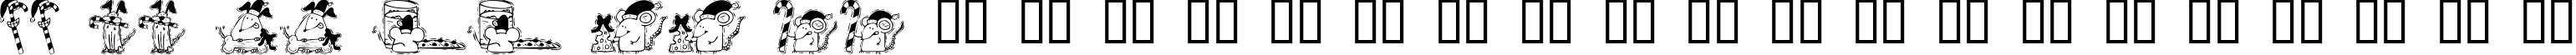 Пример написания английского алфавита шрифтом KR Christmas 2002 Dings 3